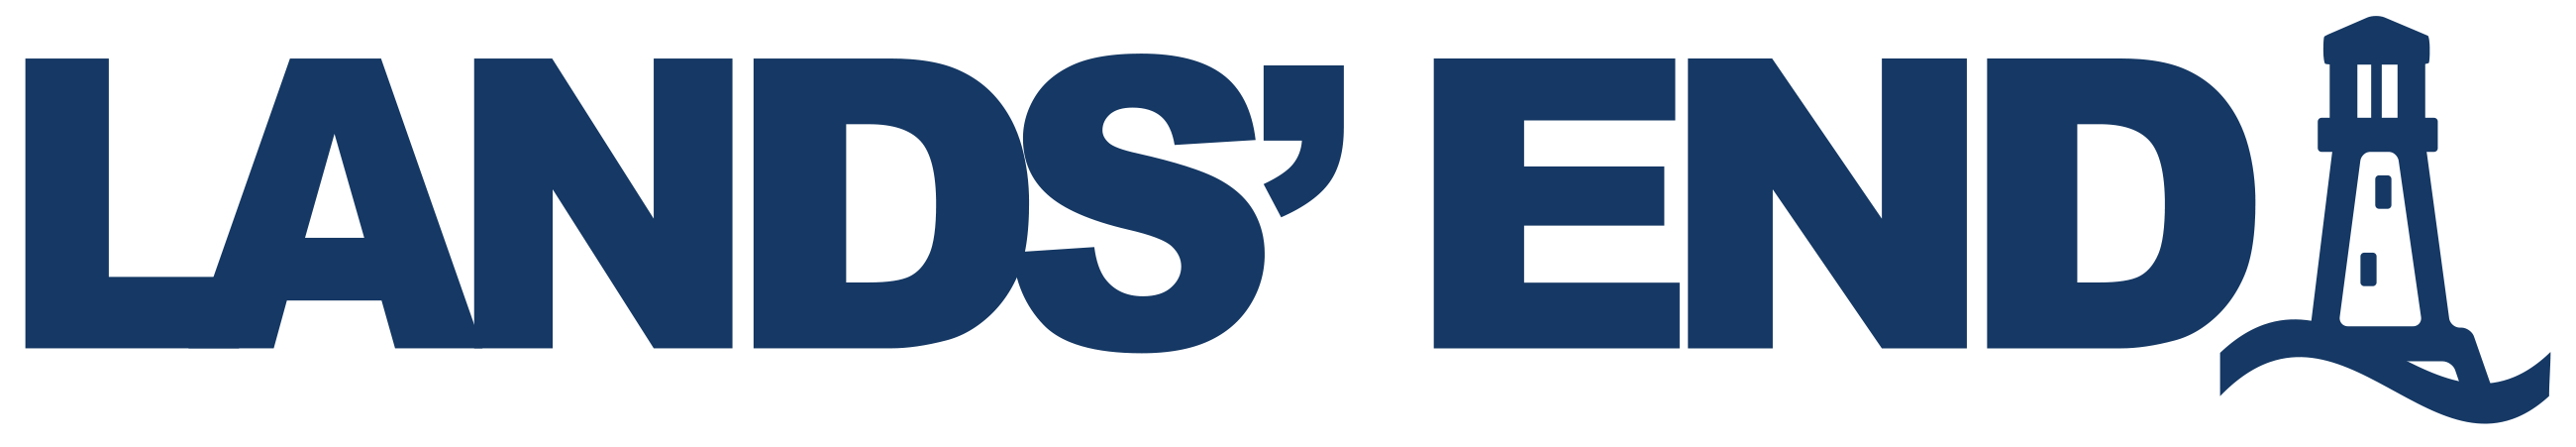 2018-le-logo